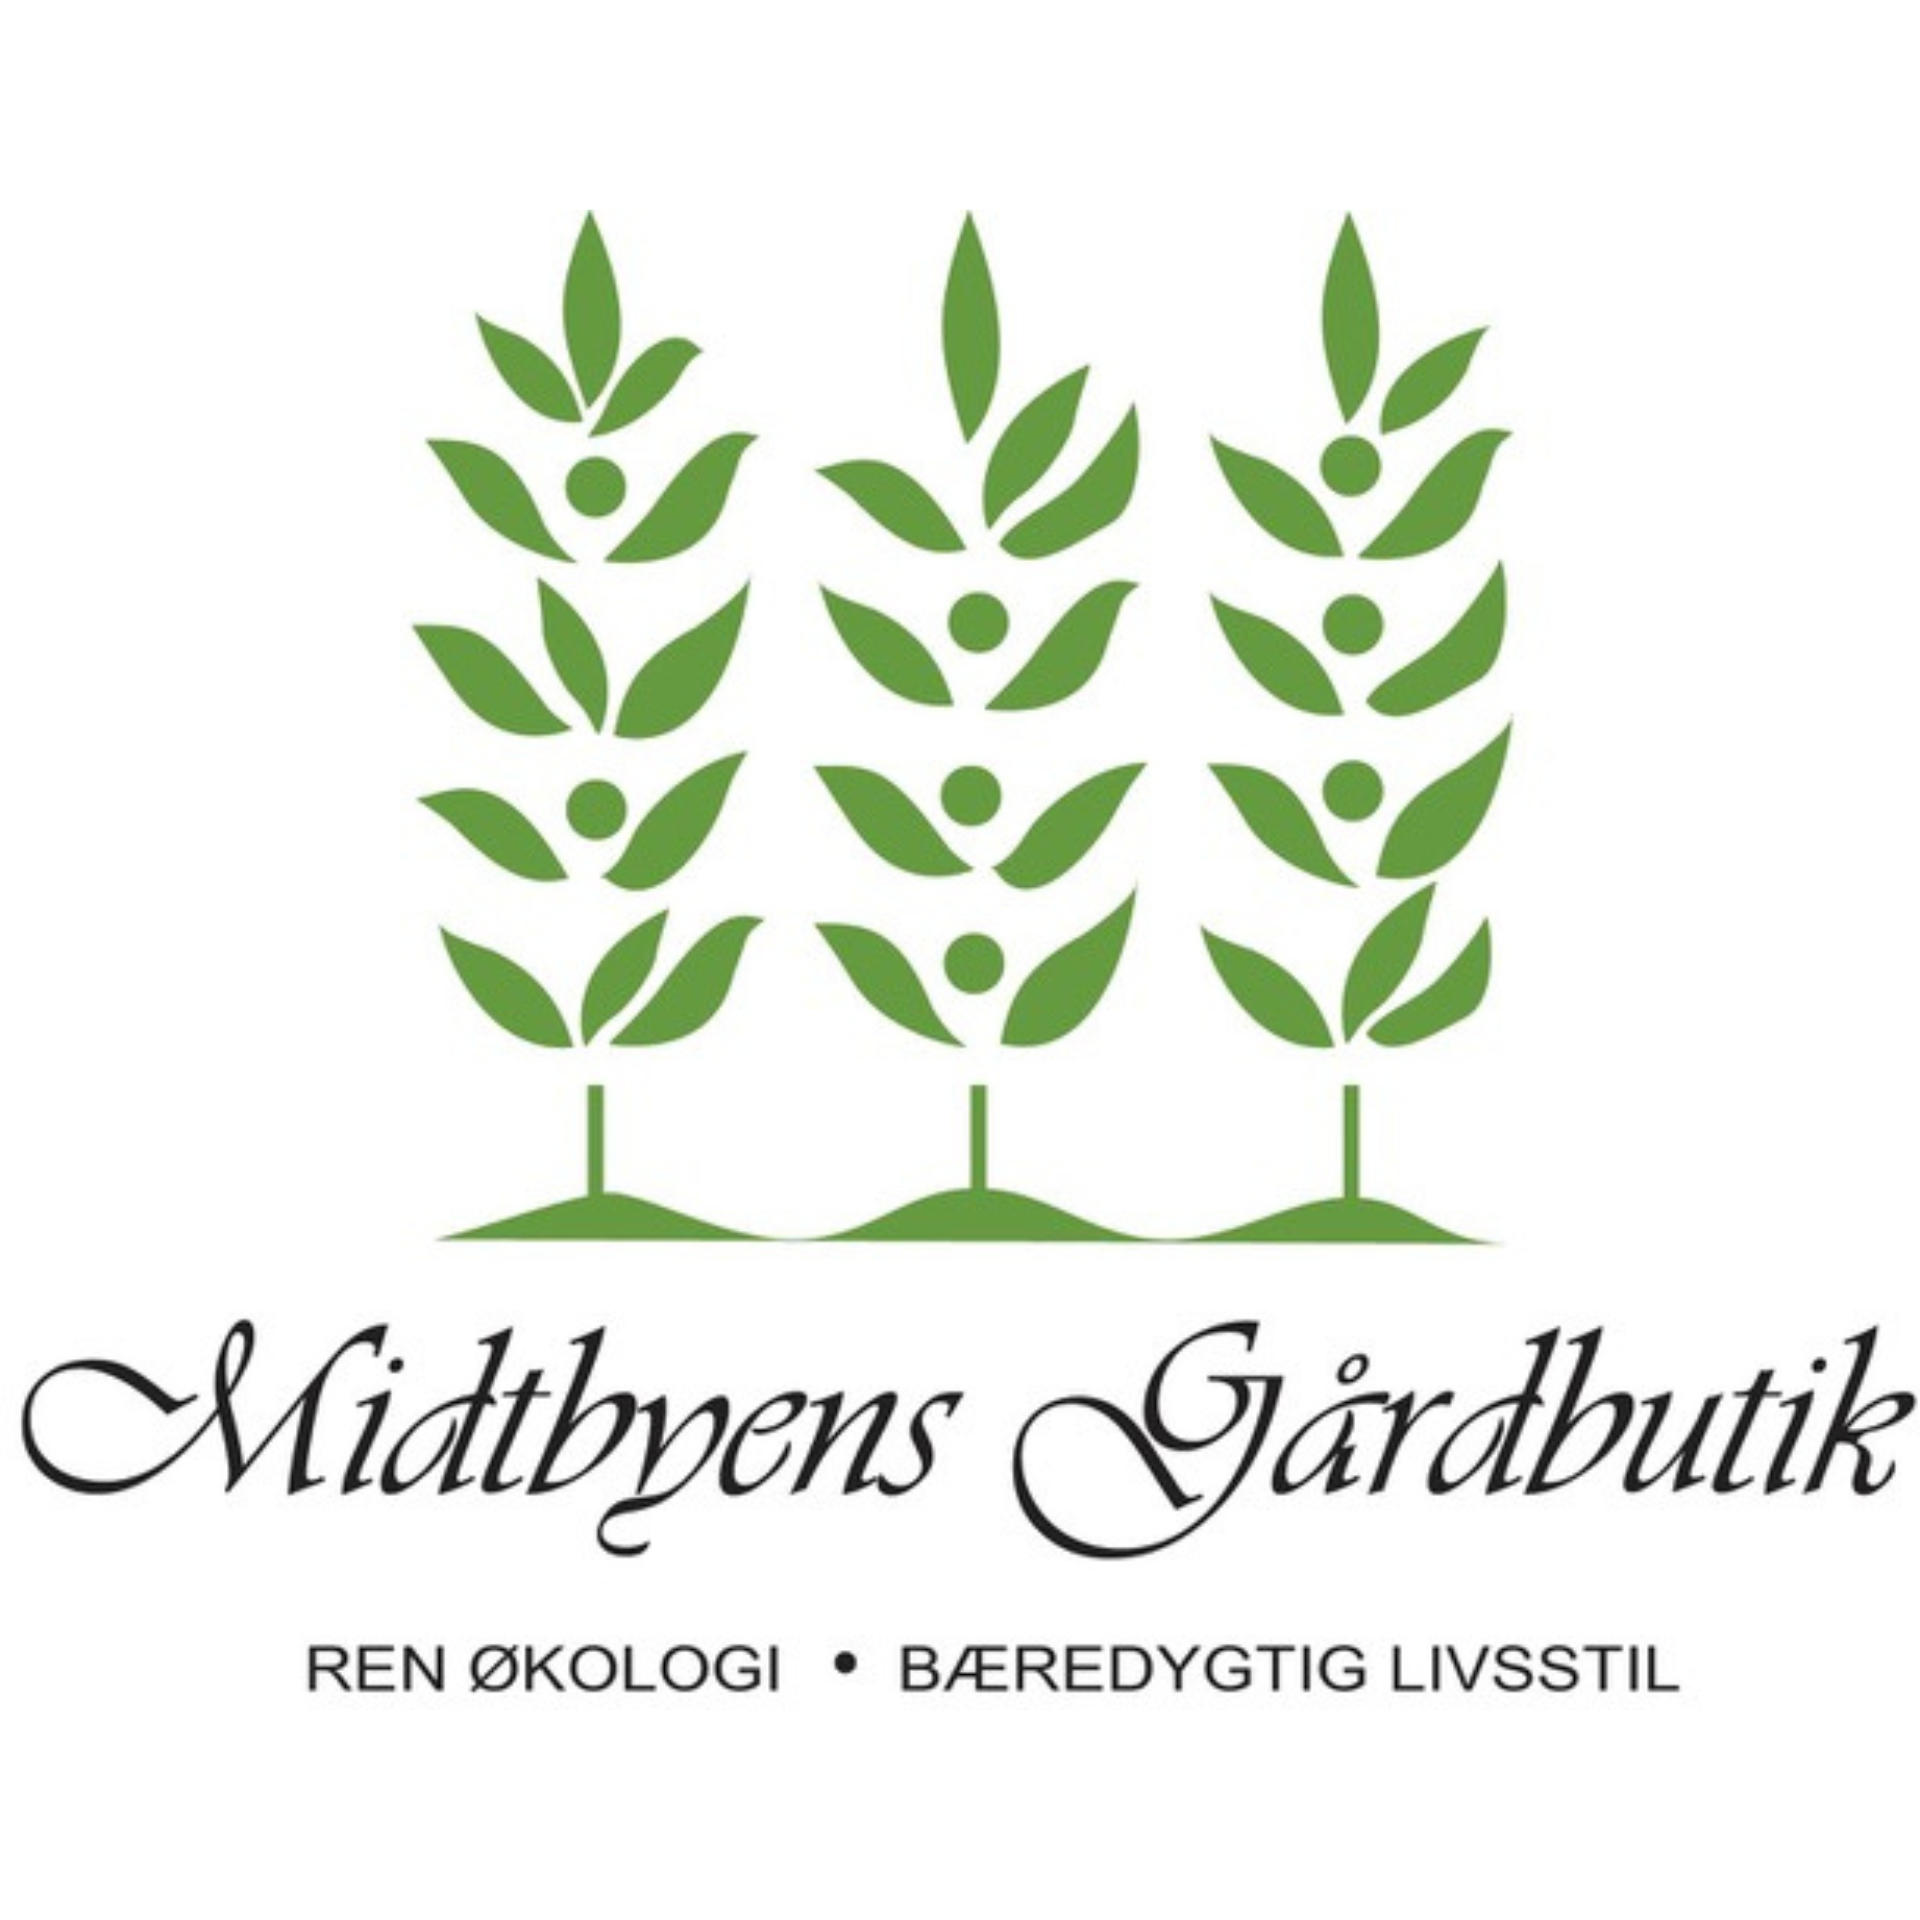 Midtbyens Gardbutik logo.png